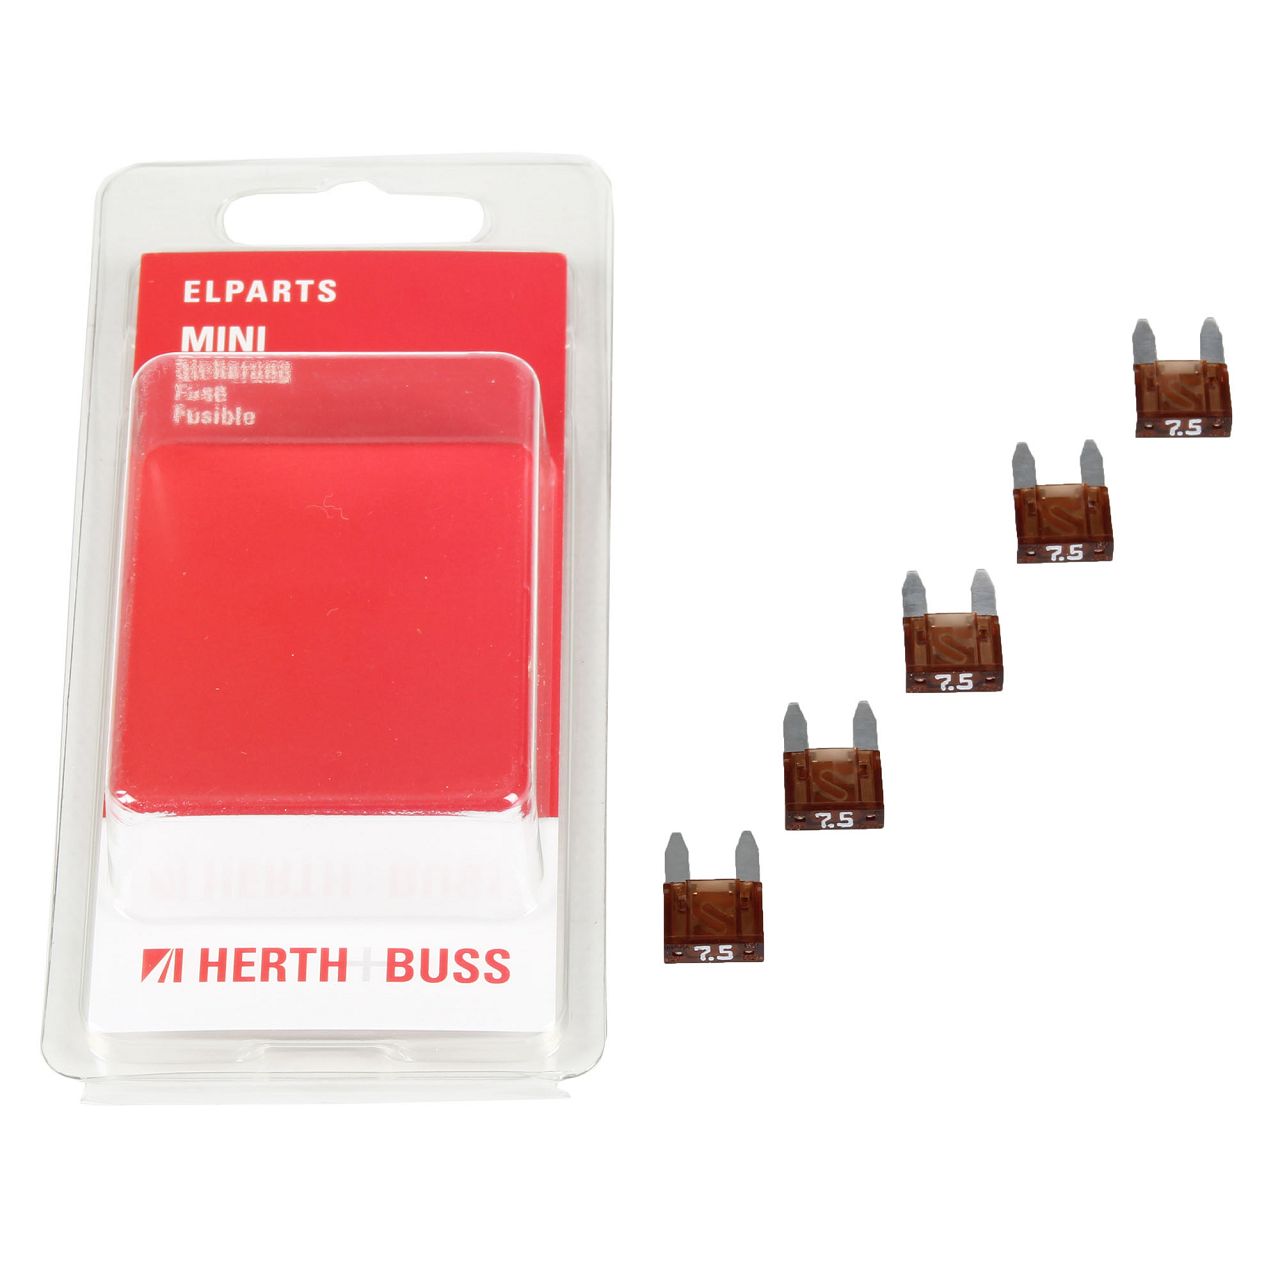 5x HERTH+BUSS ELPARTS Sicherung MINI-Flachsicherung 7,5A bis 32V BRAUN